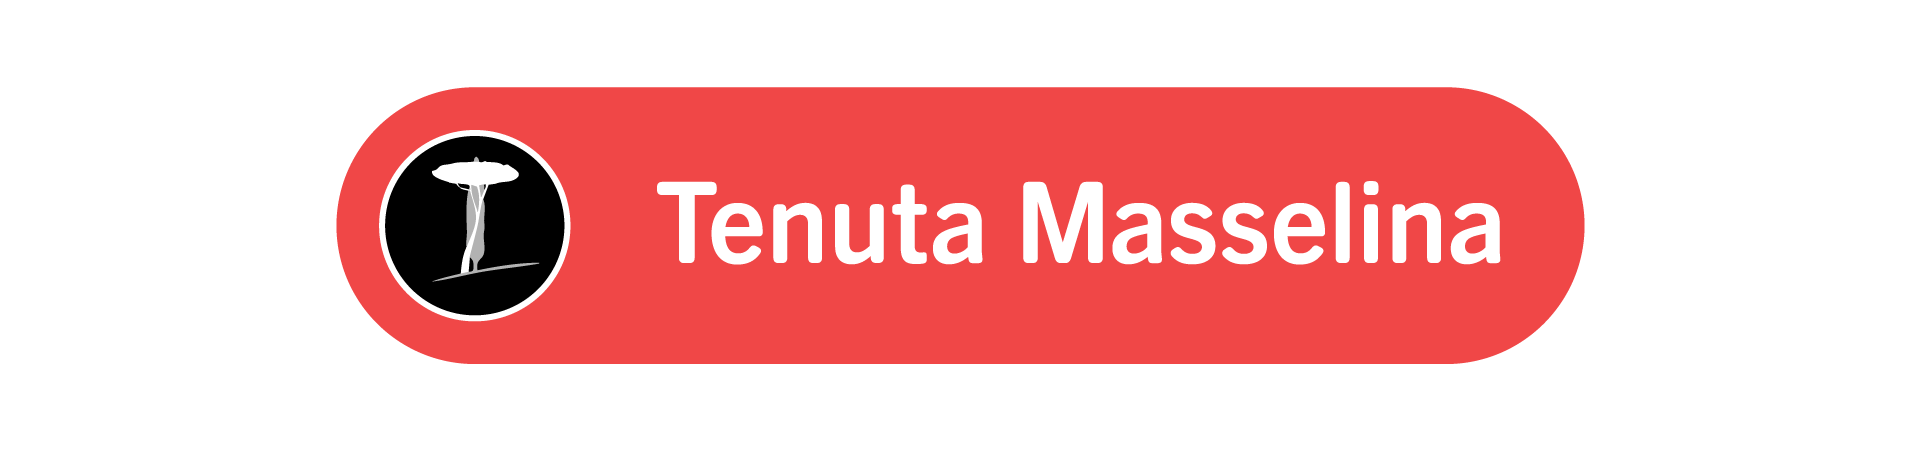 Tenuta Masselina